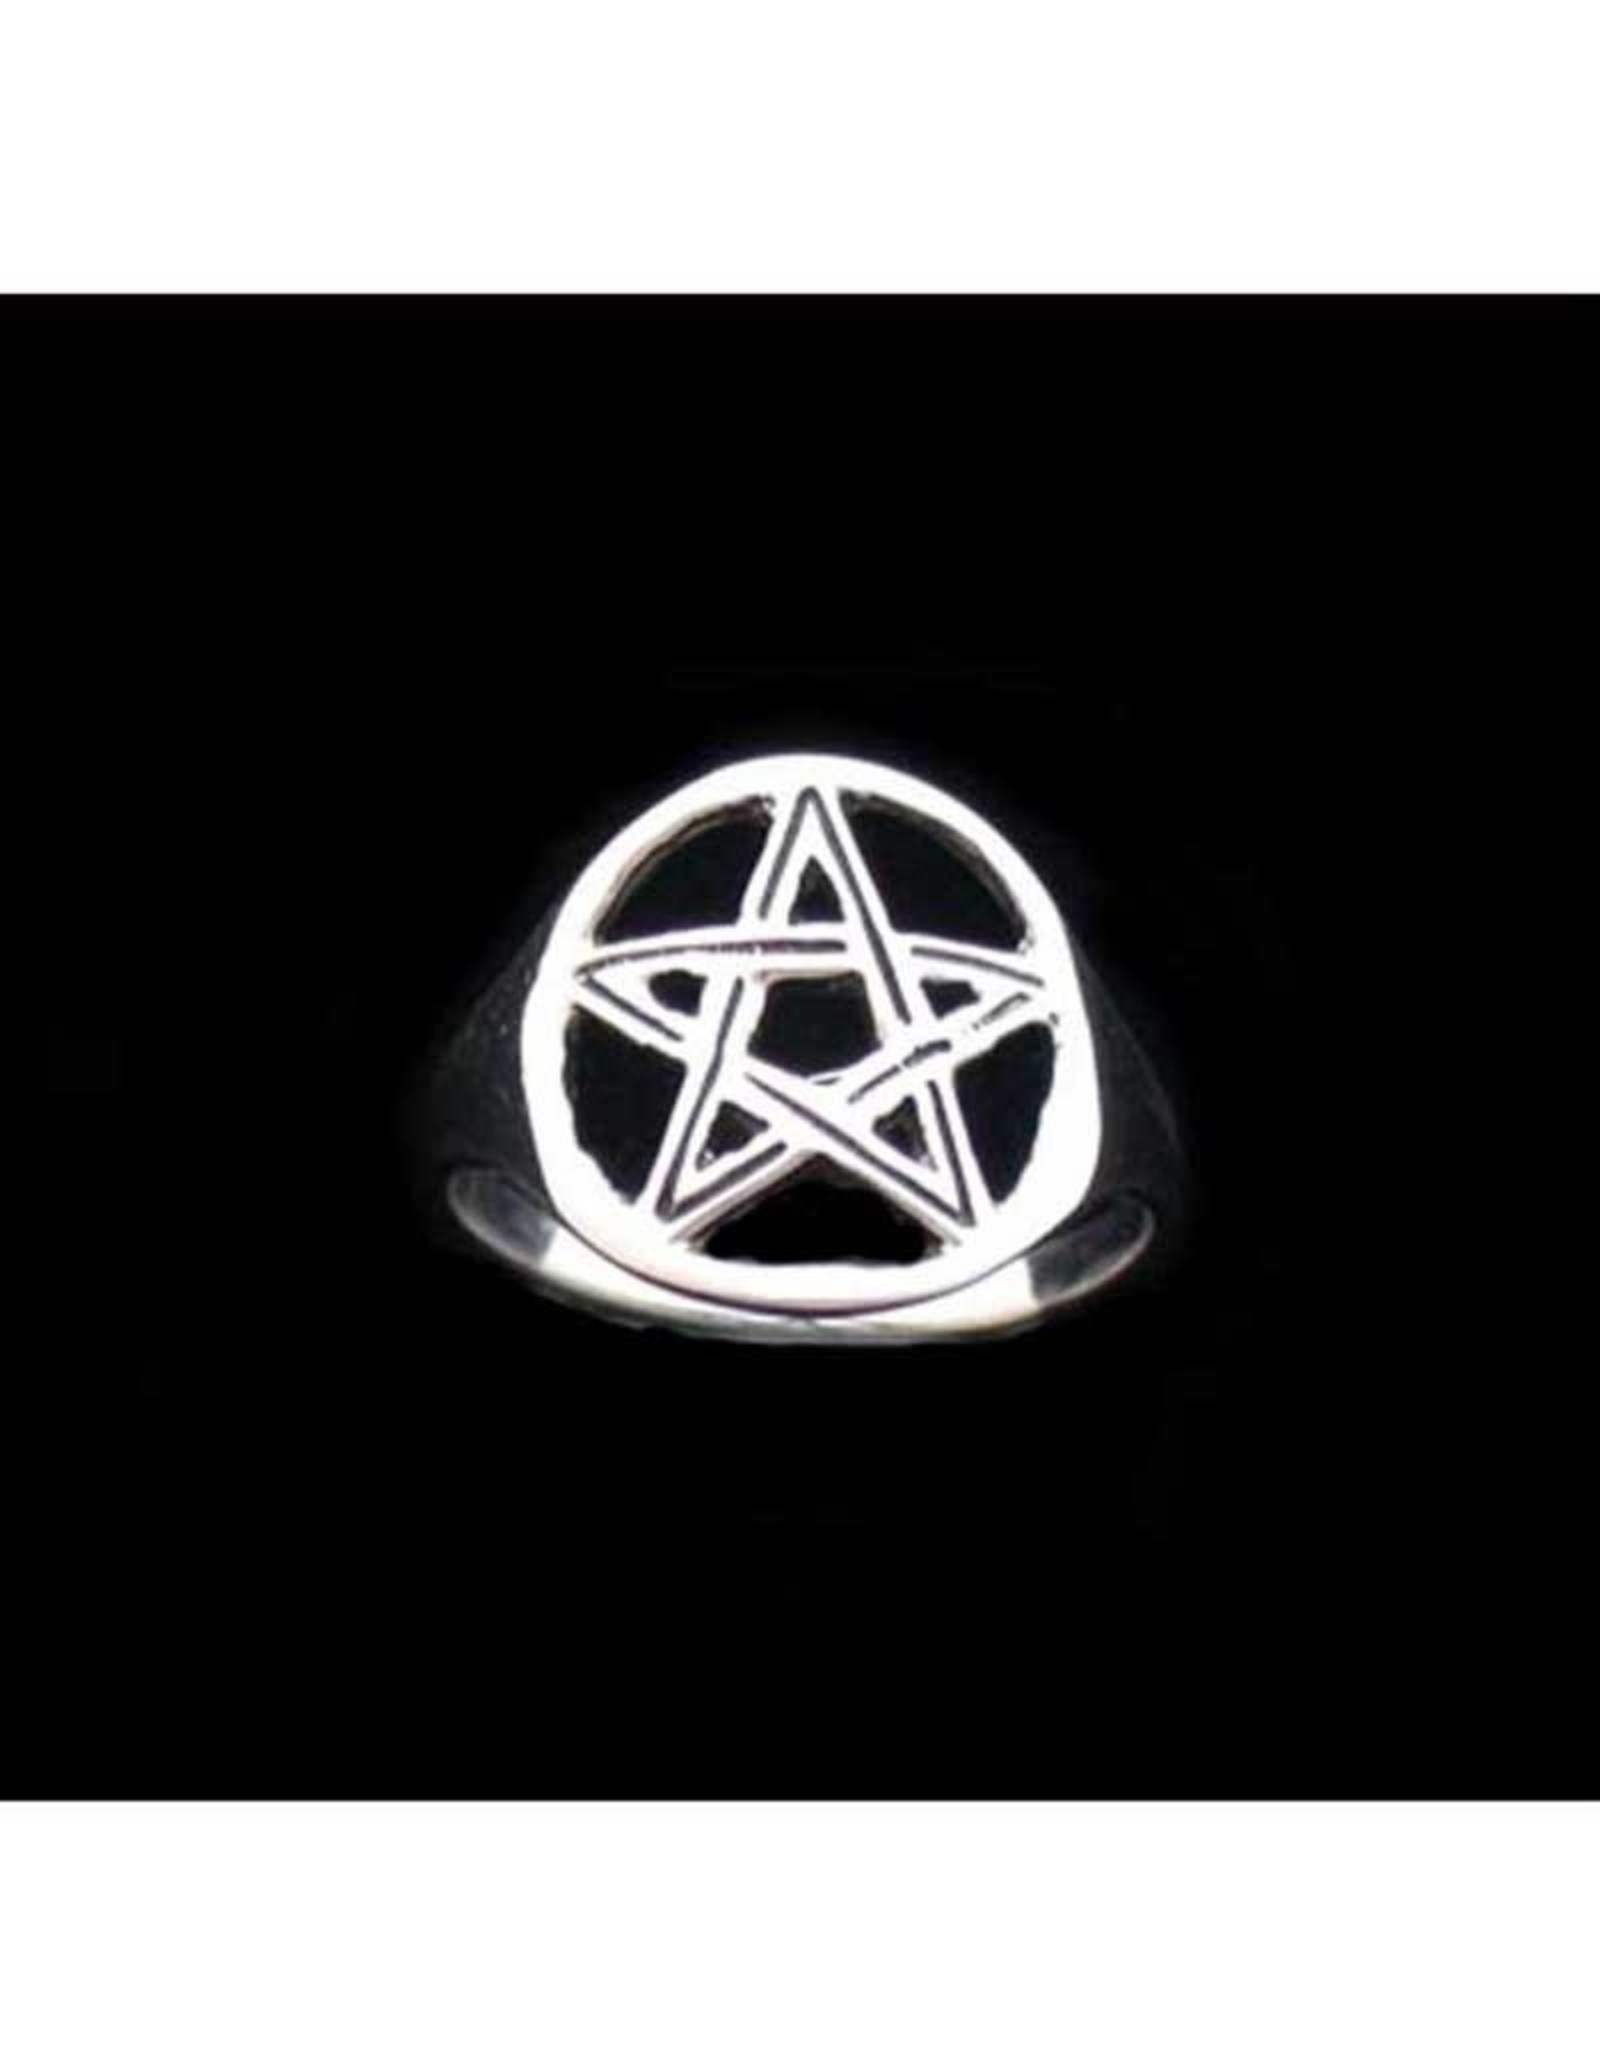 Pentagram Ring - Size 3 Sterling Silver